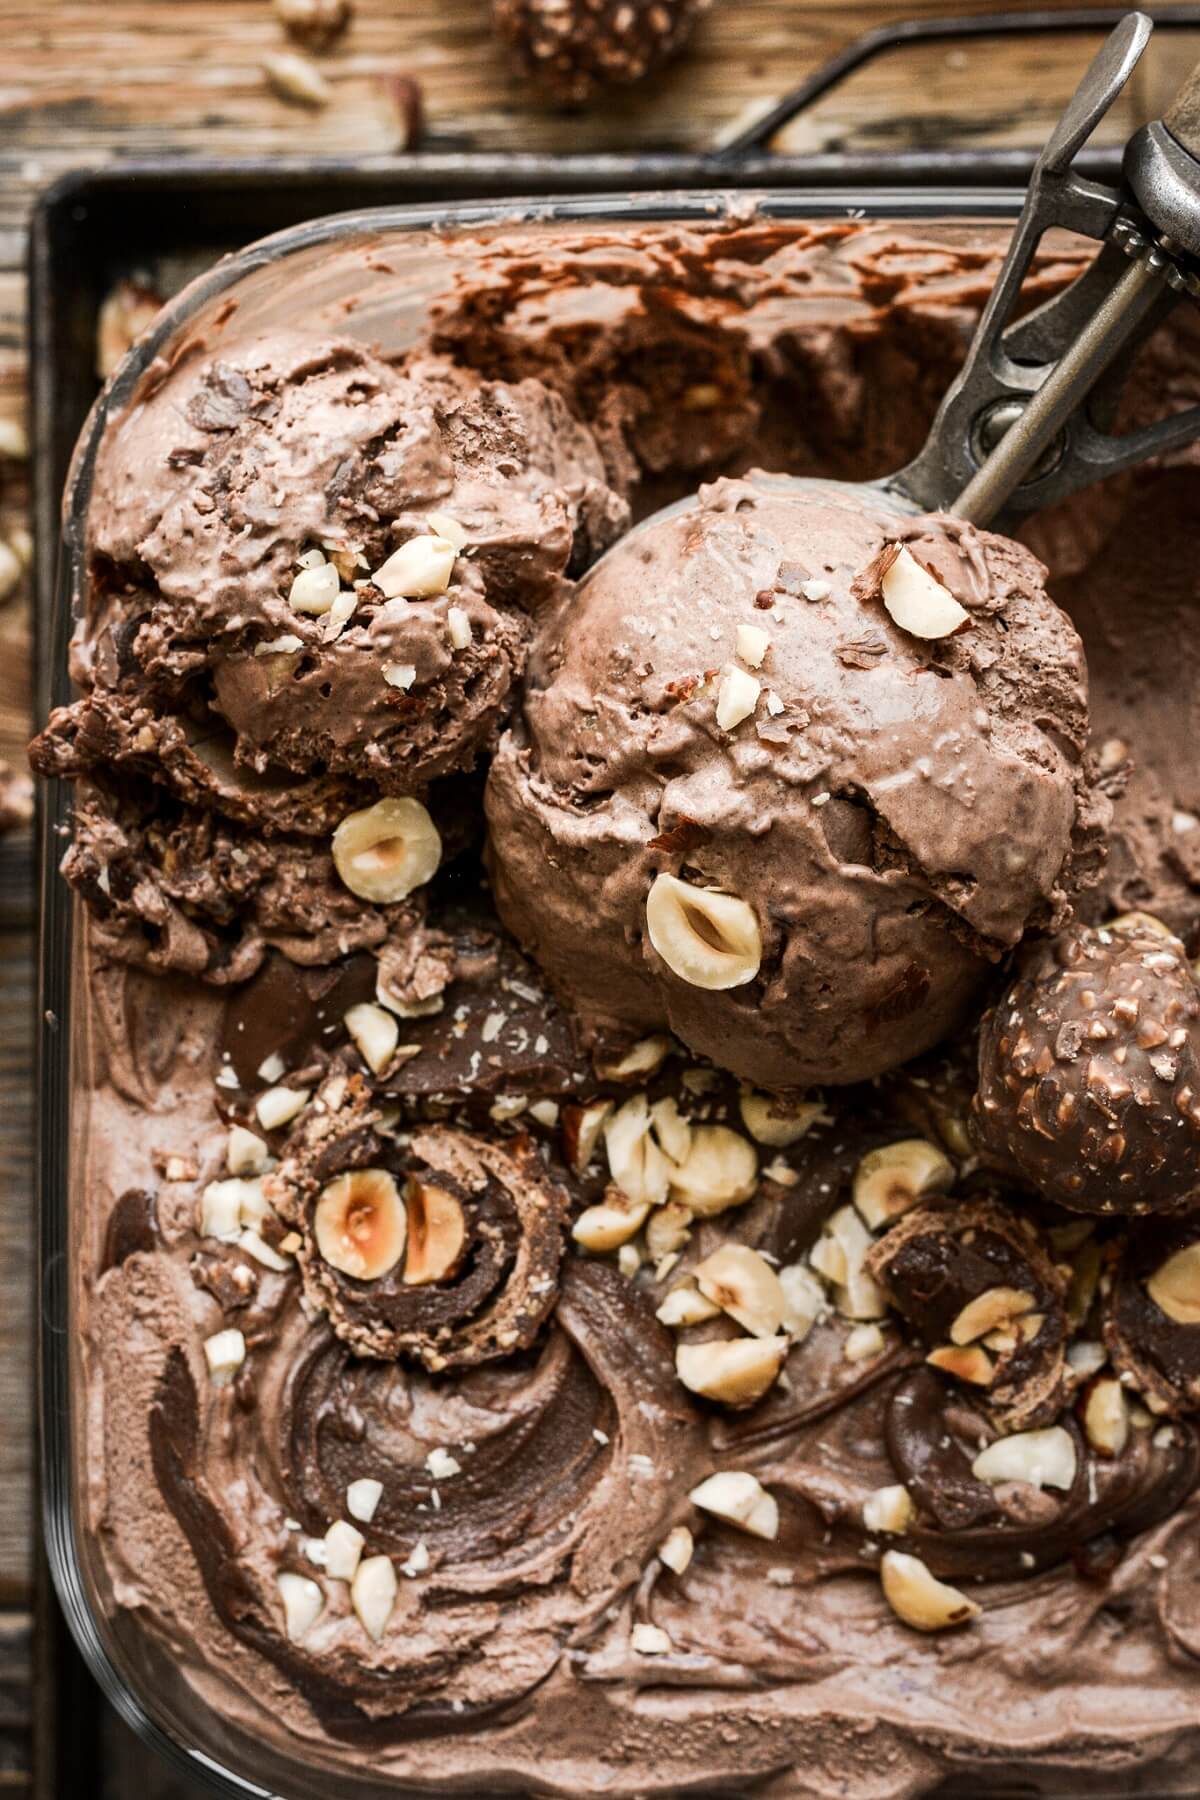 Scoops of chocolate hazelnut ice cream sprinkled with hazelnuts.